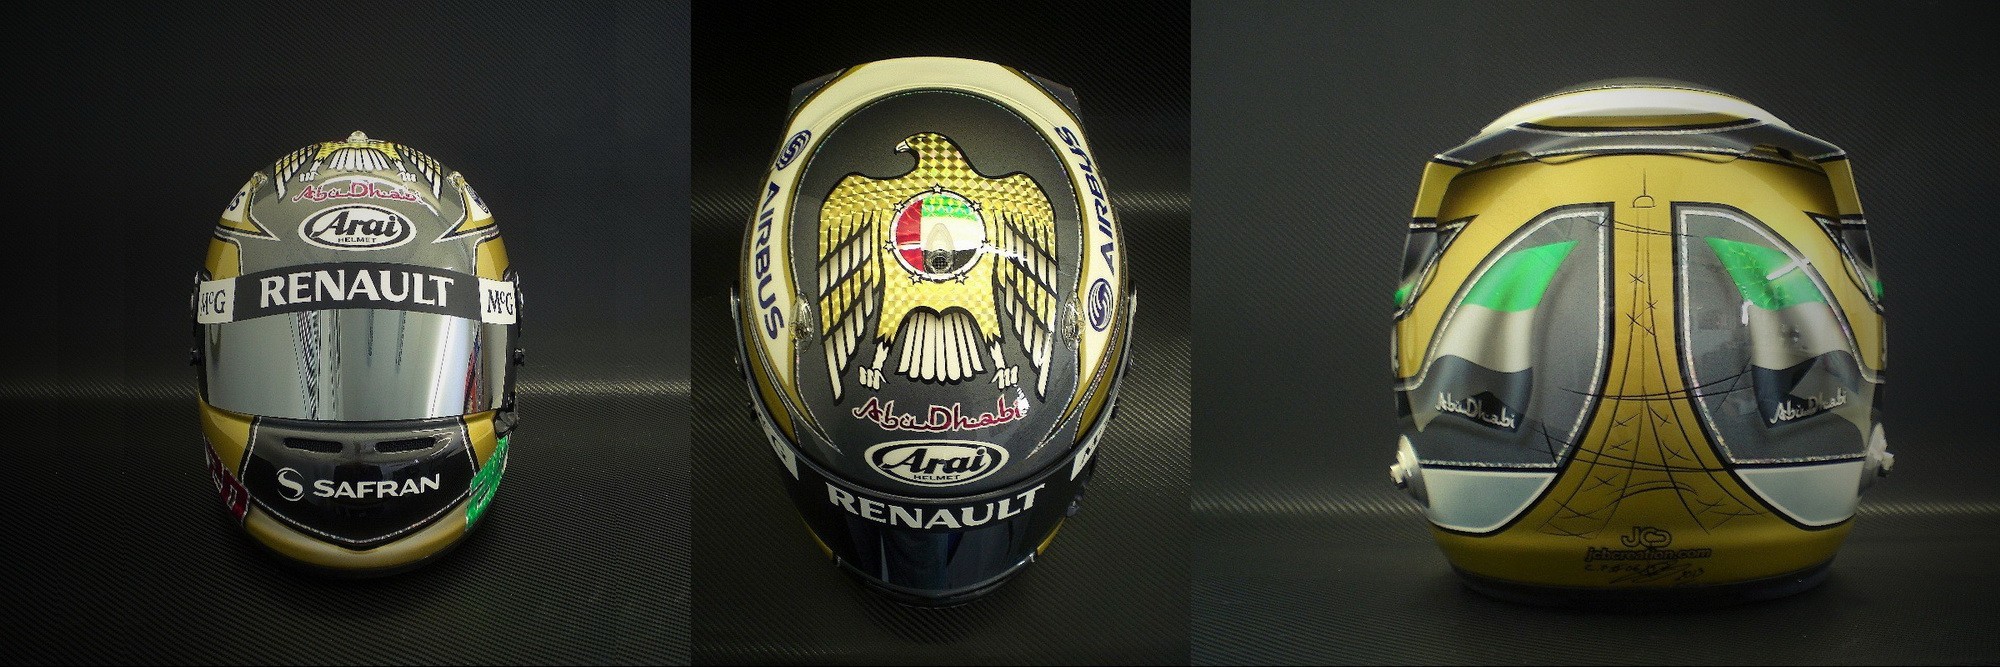 Шлем Шарля Пика на Гран-При Абу-Даби 2013 | 2013 Abu Dhabi Grand Prix helmet of Charles Pic